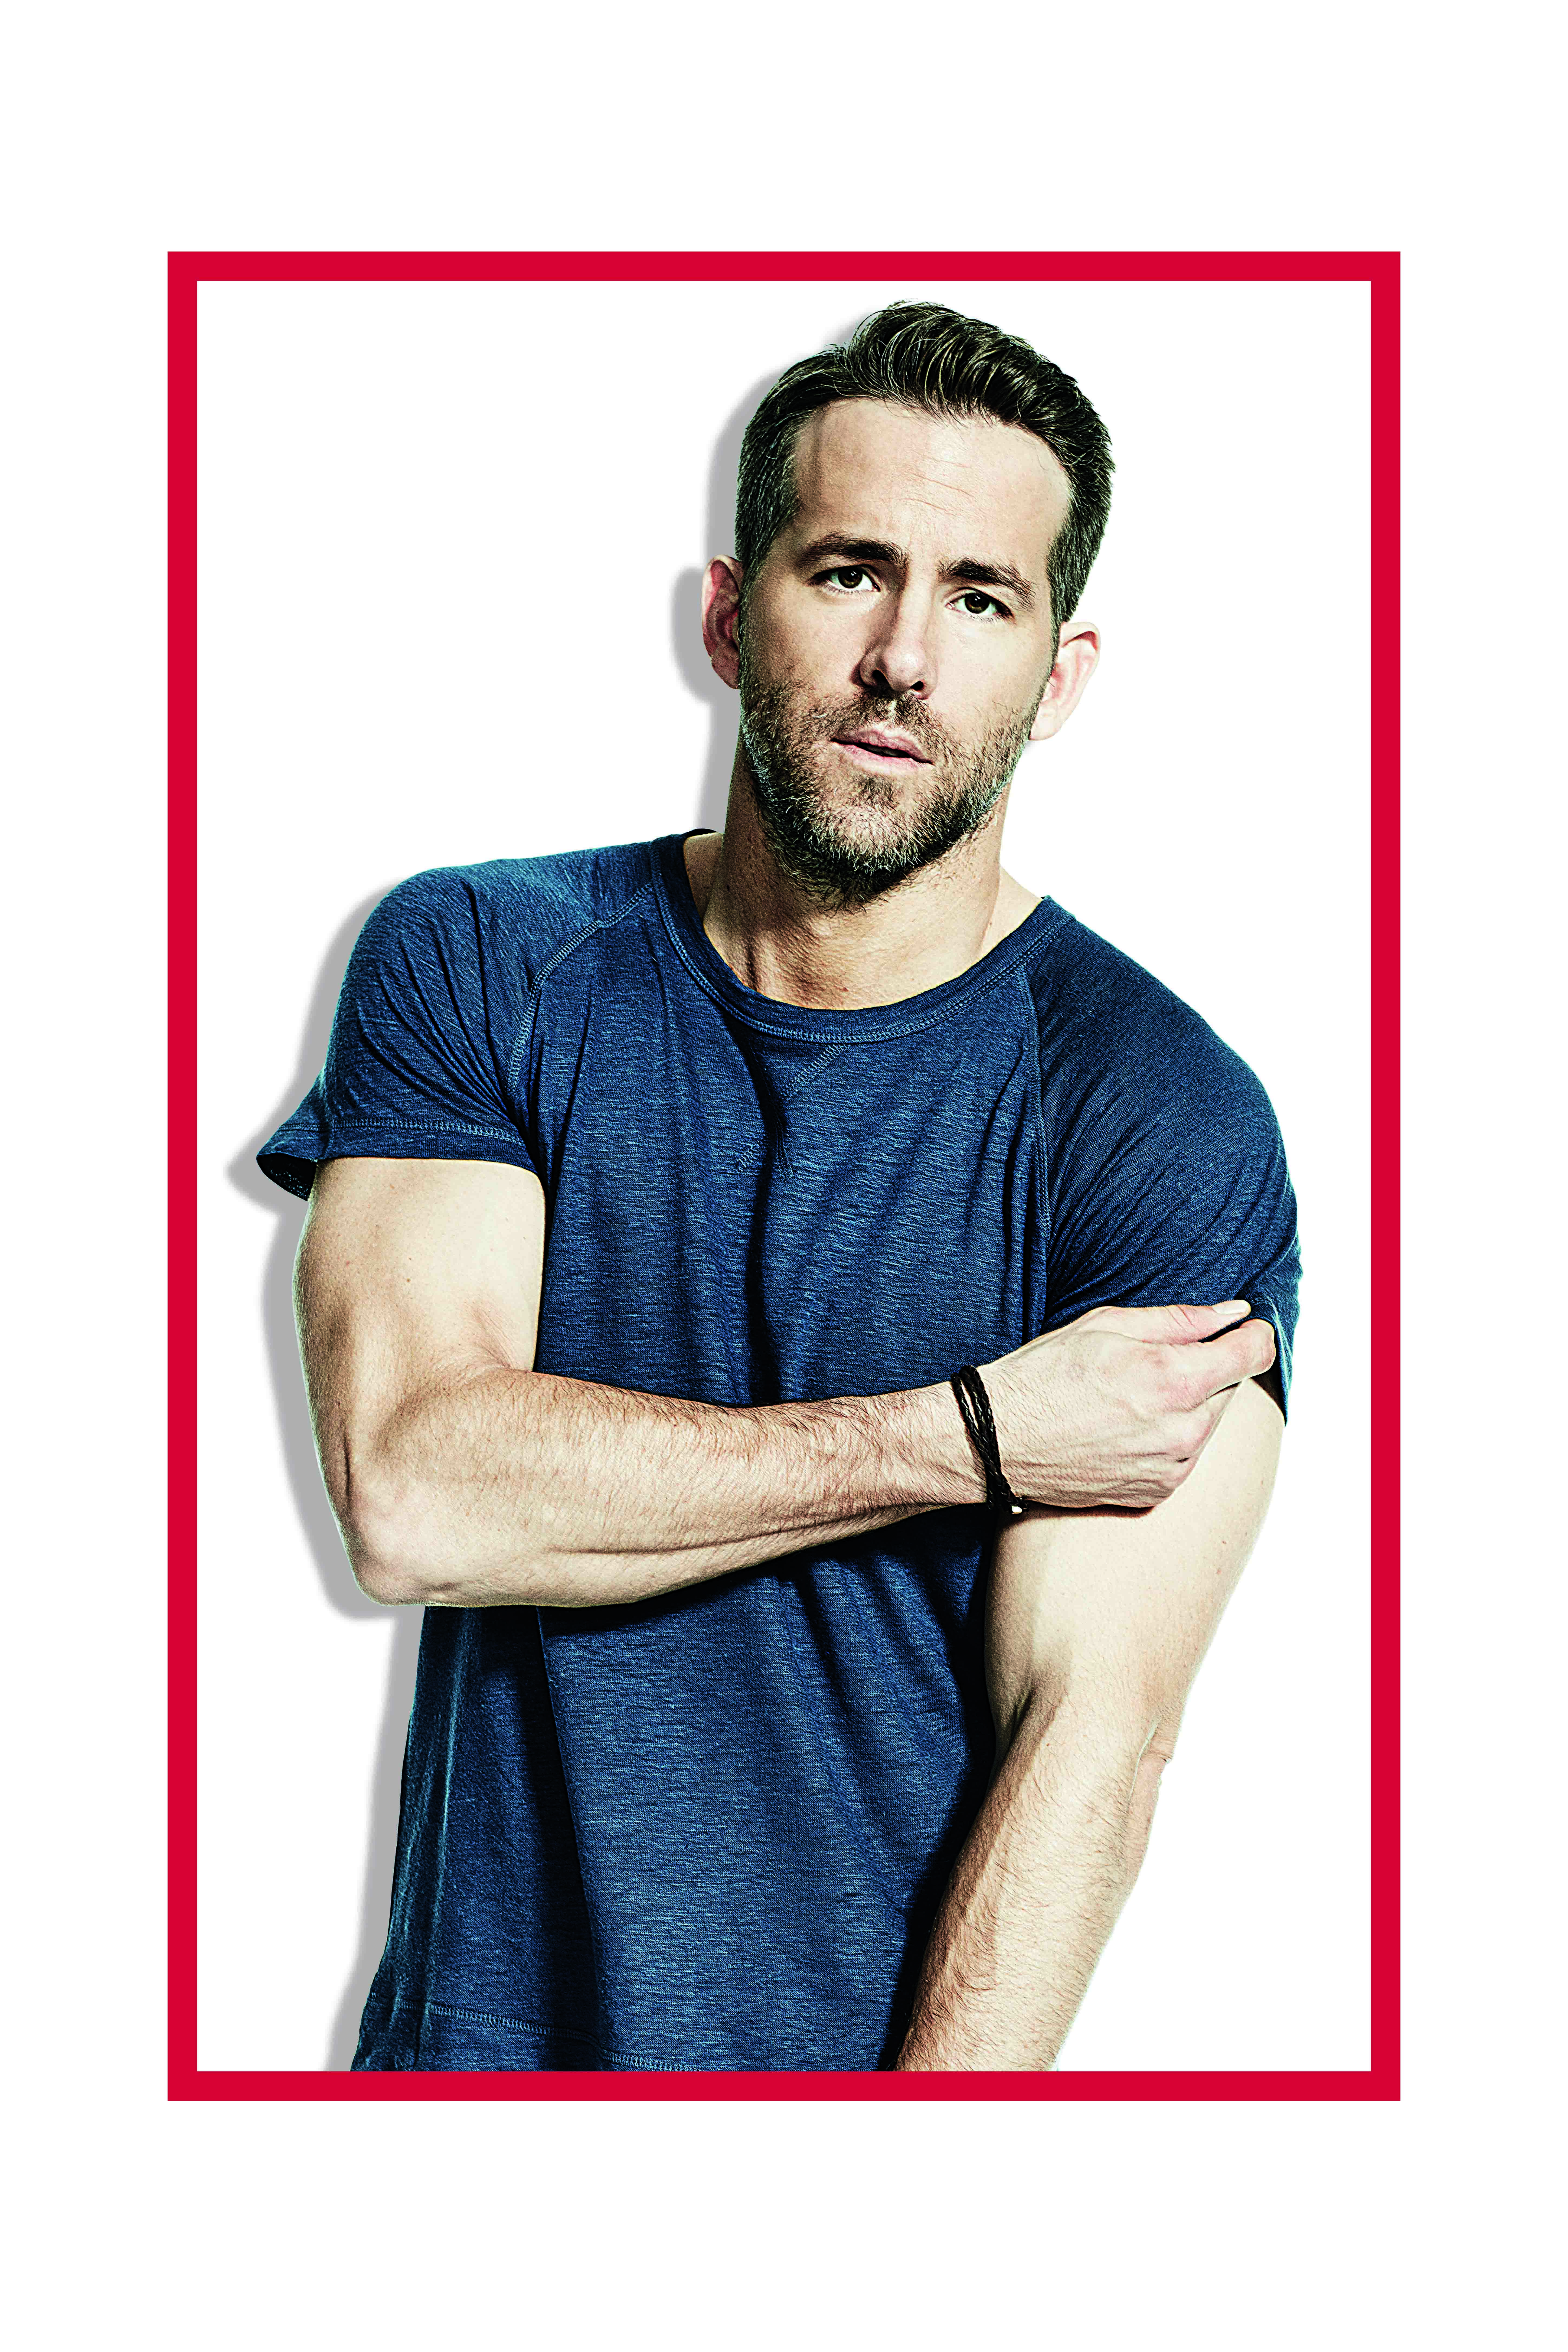 Ideal Weight (Ryan Reynolds) T-Shirts